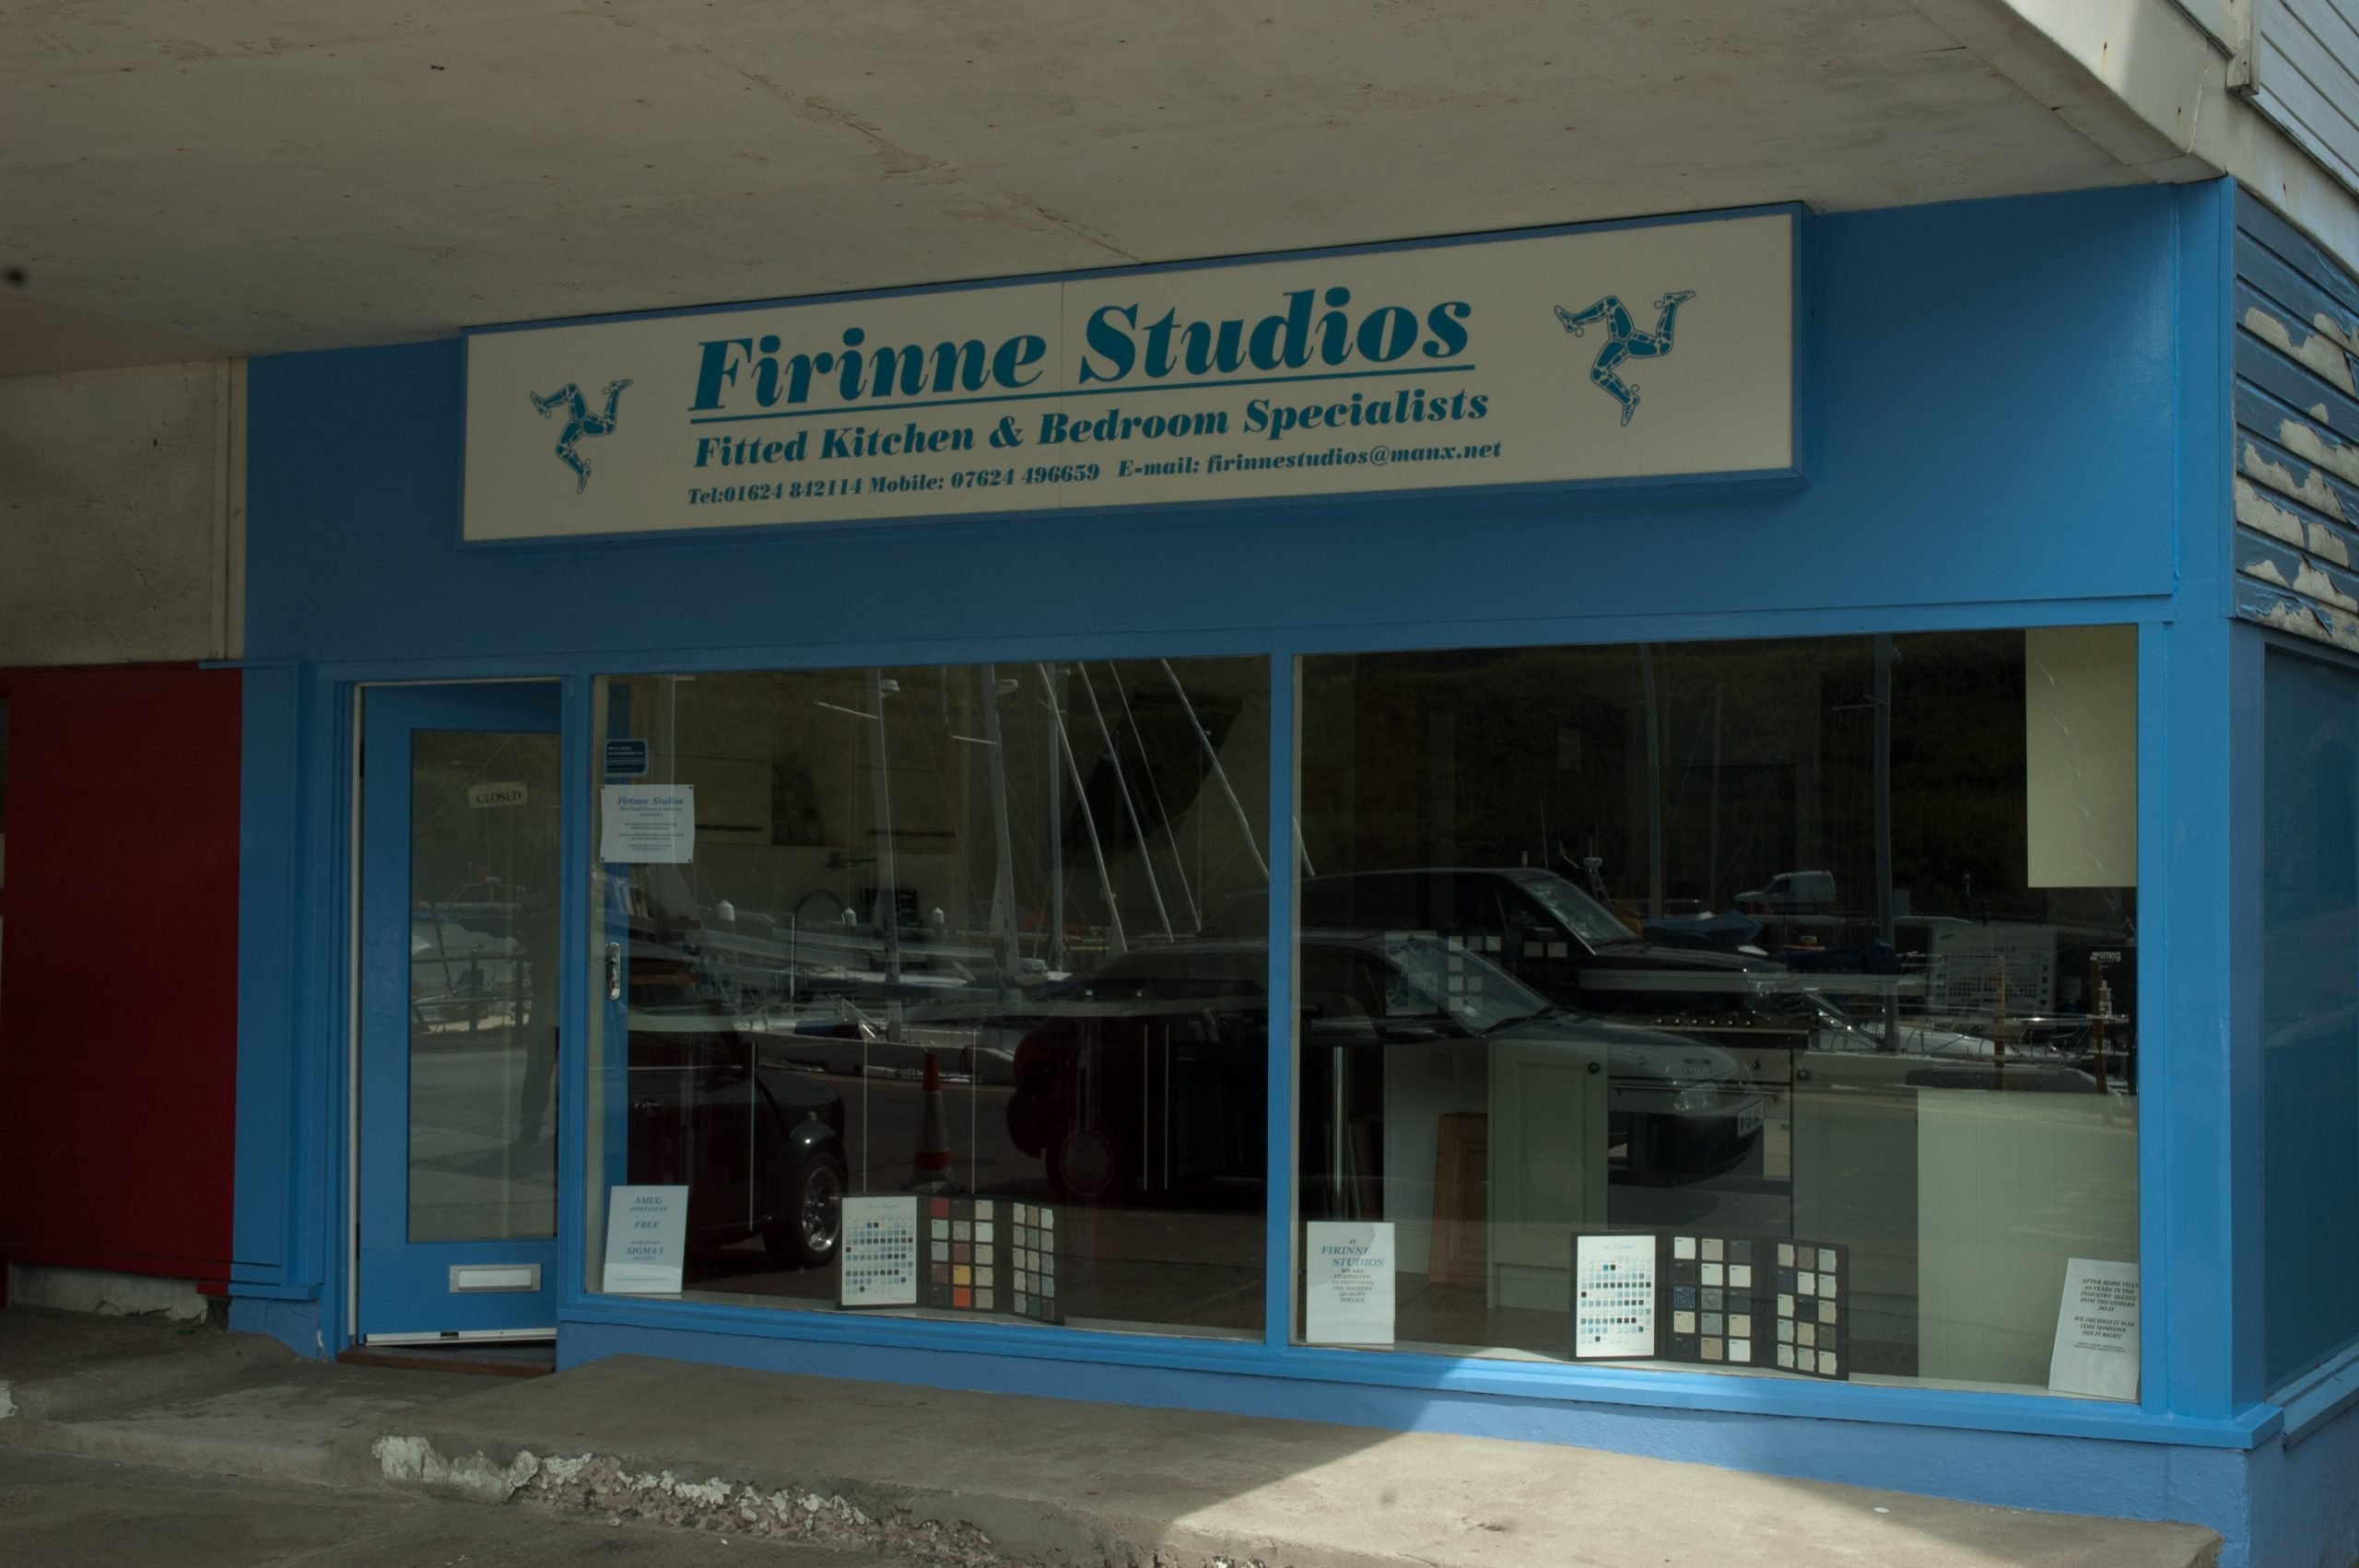 Firinne Studios